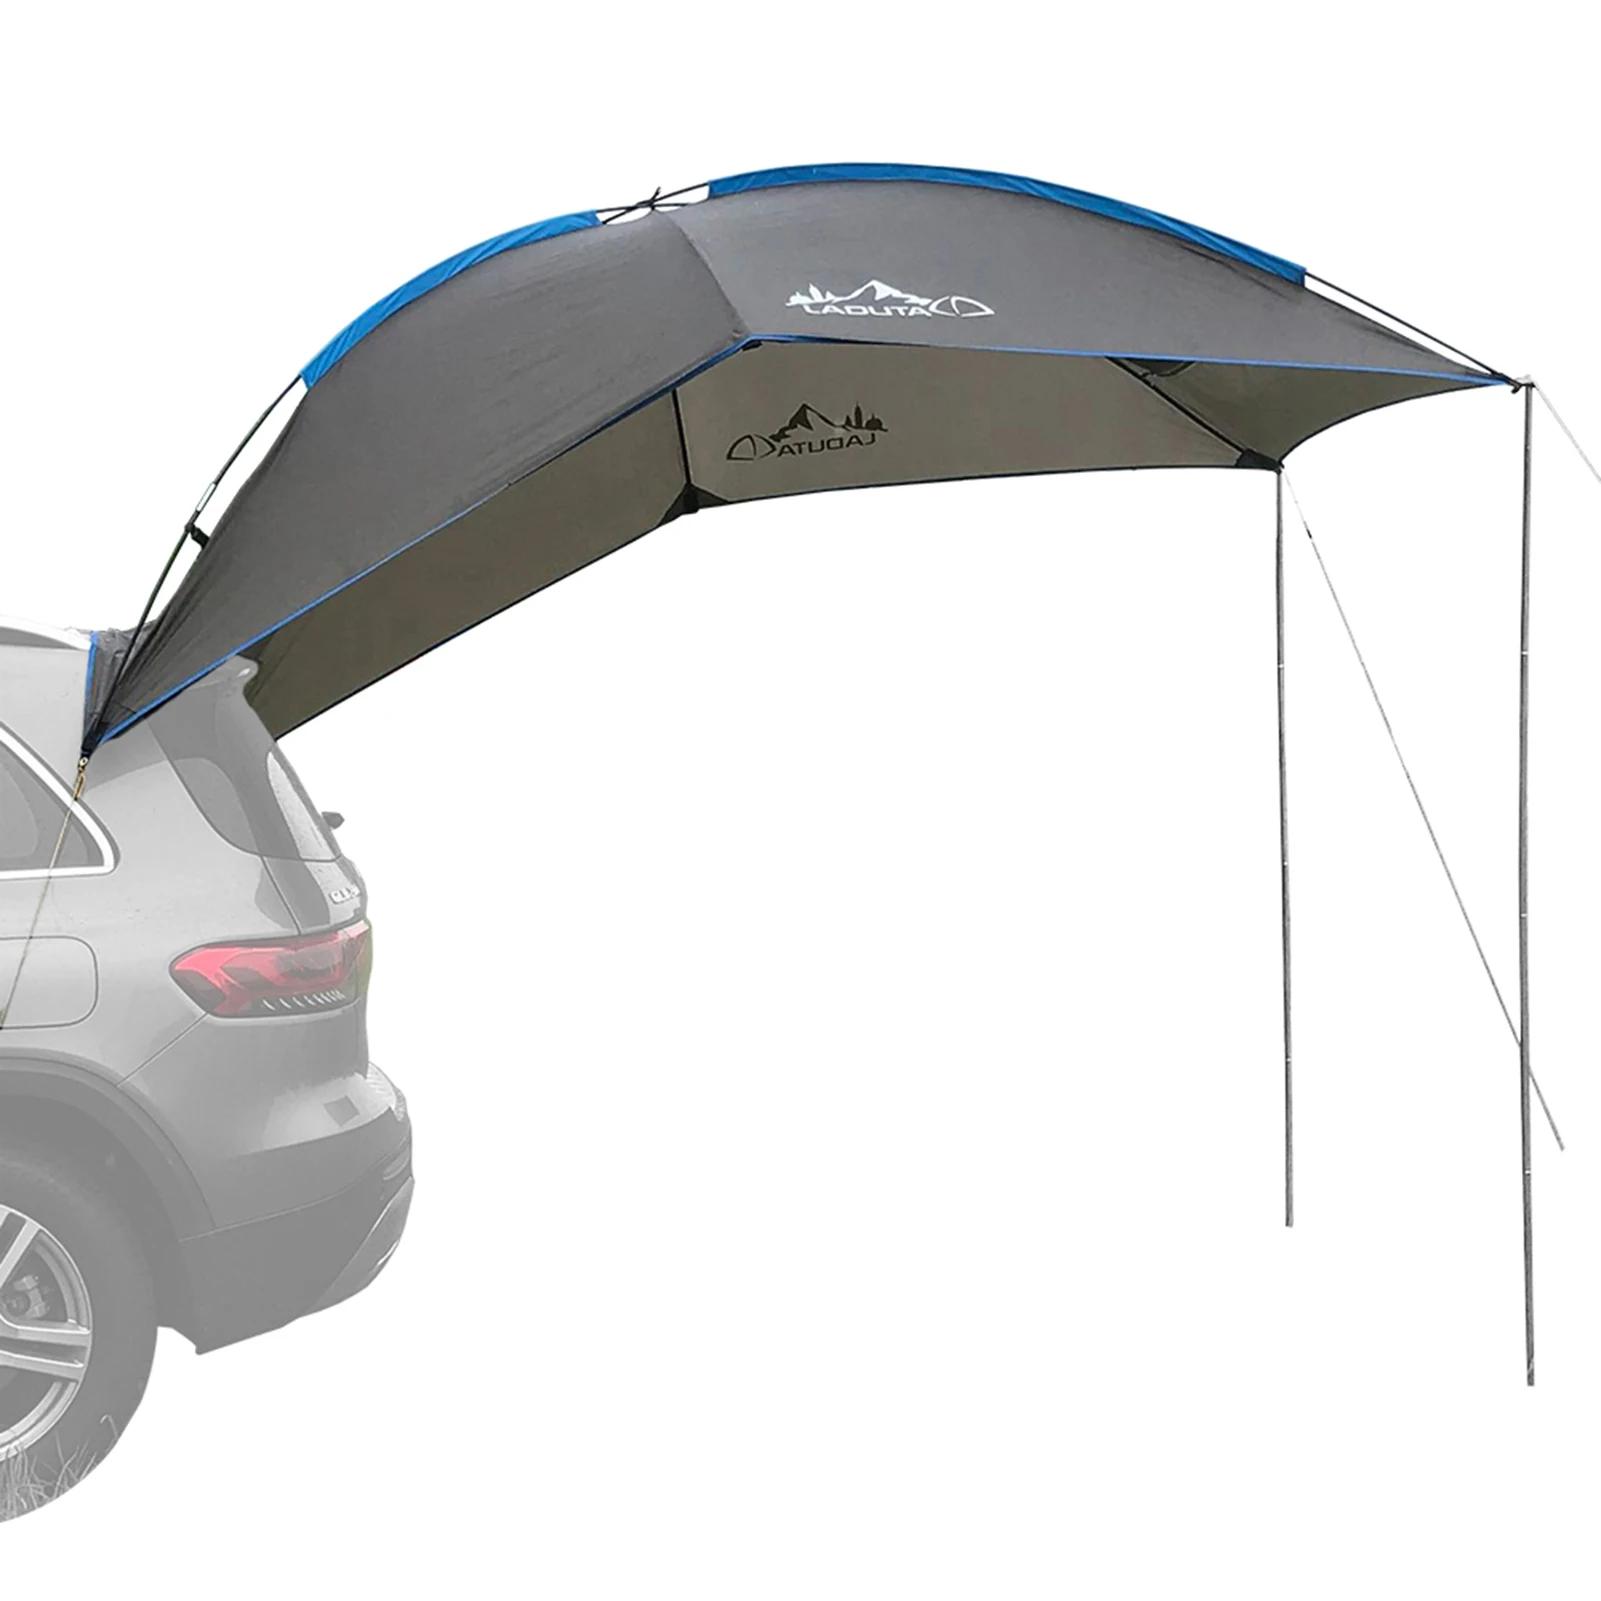 Waterproof Car Rear Tent Camping Shelter Outdoor Car Tent Beach Sun Shelter Awning Shelter Car Rear Extension Sunsha